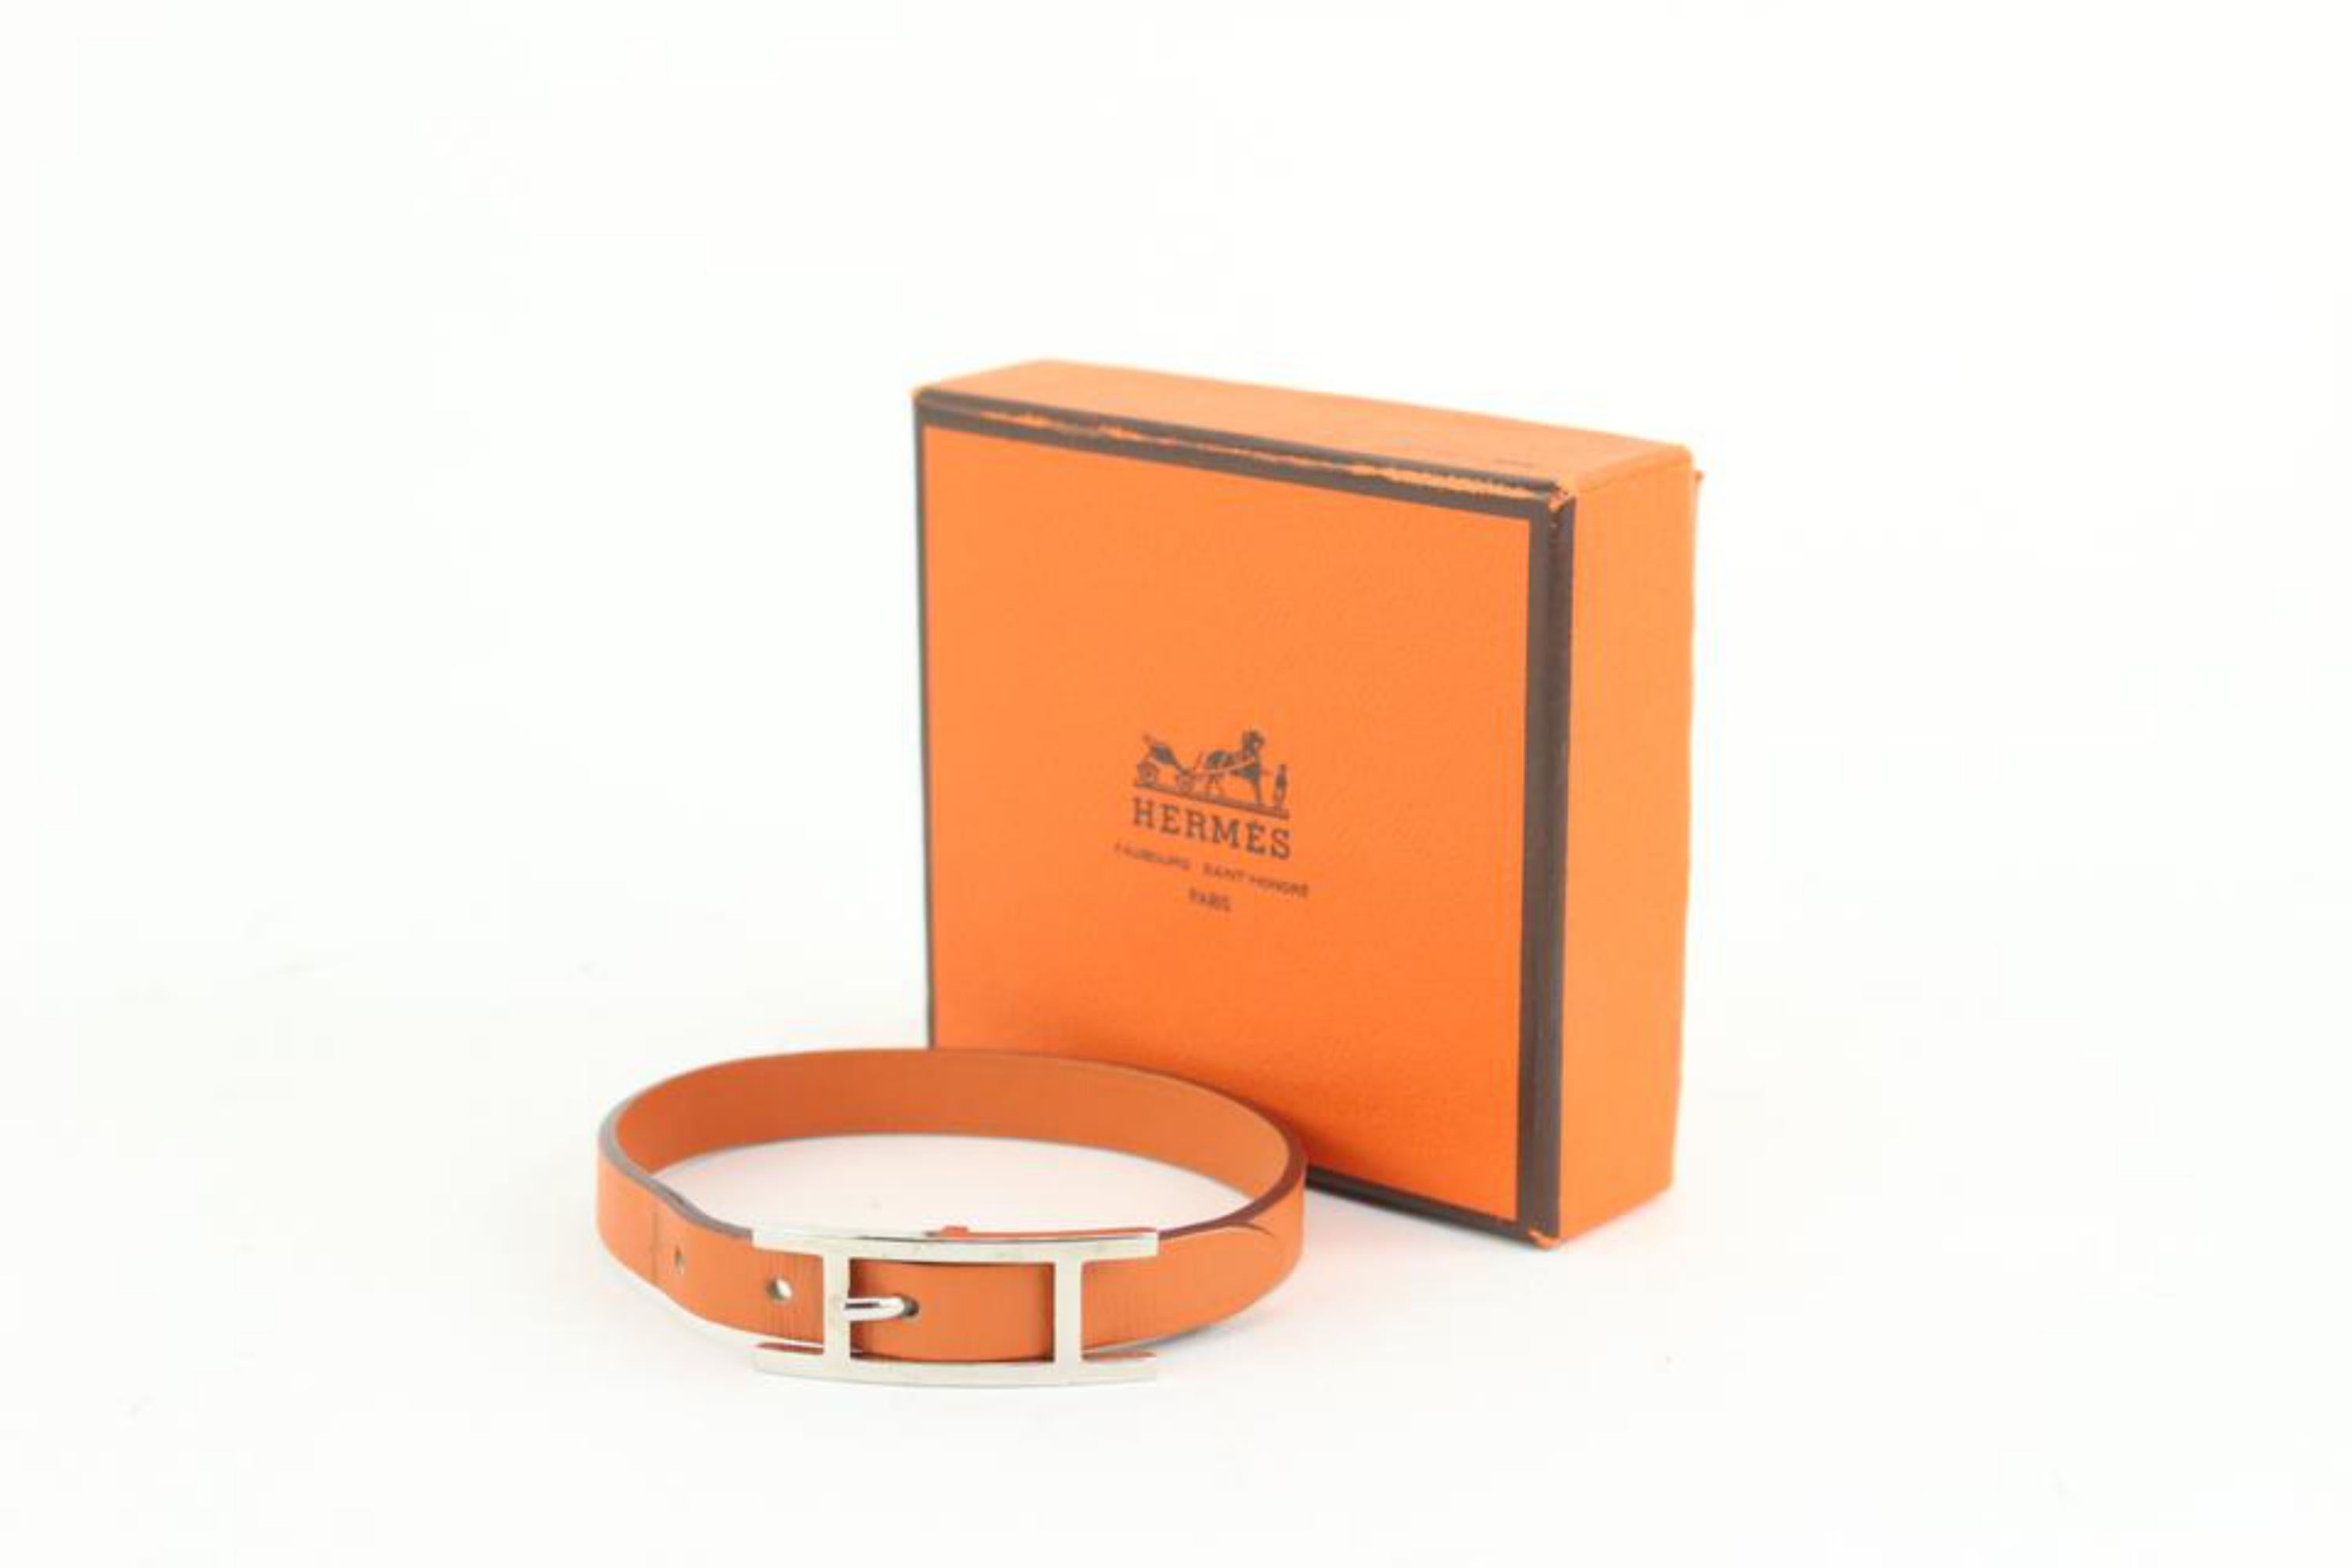 Hermès Orange Leather Silver H Api Bracelet 16h23
Date Code/Serial Number: J in a Square
Measurements: Length: 2.2